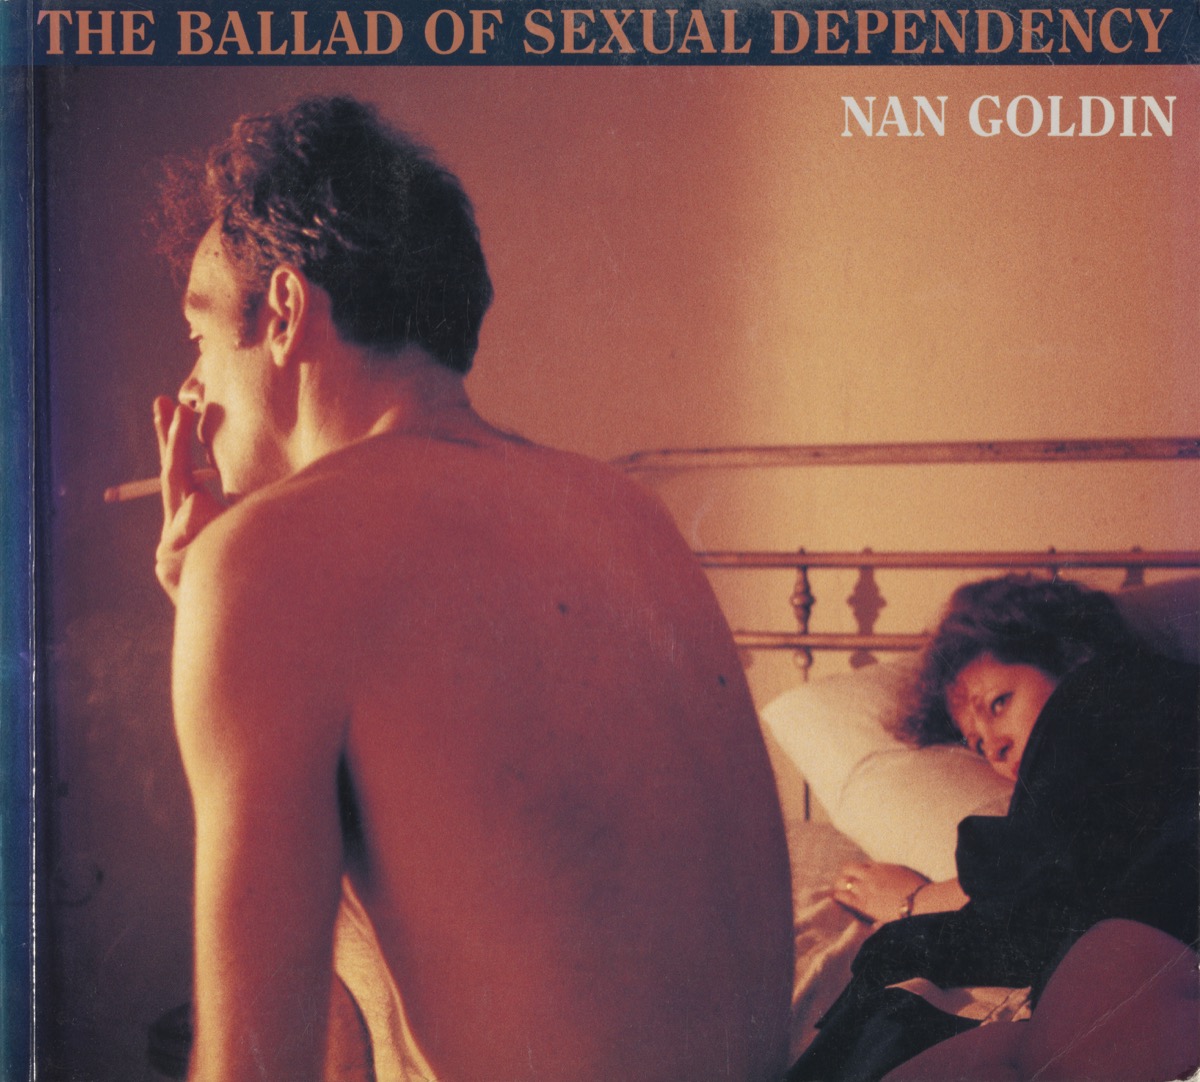 Nan Goldin, The Ballad of Sexual Dependency, Aperture, New York, 1986.